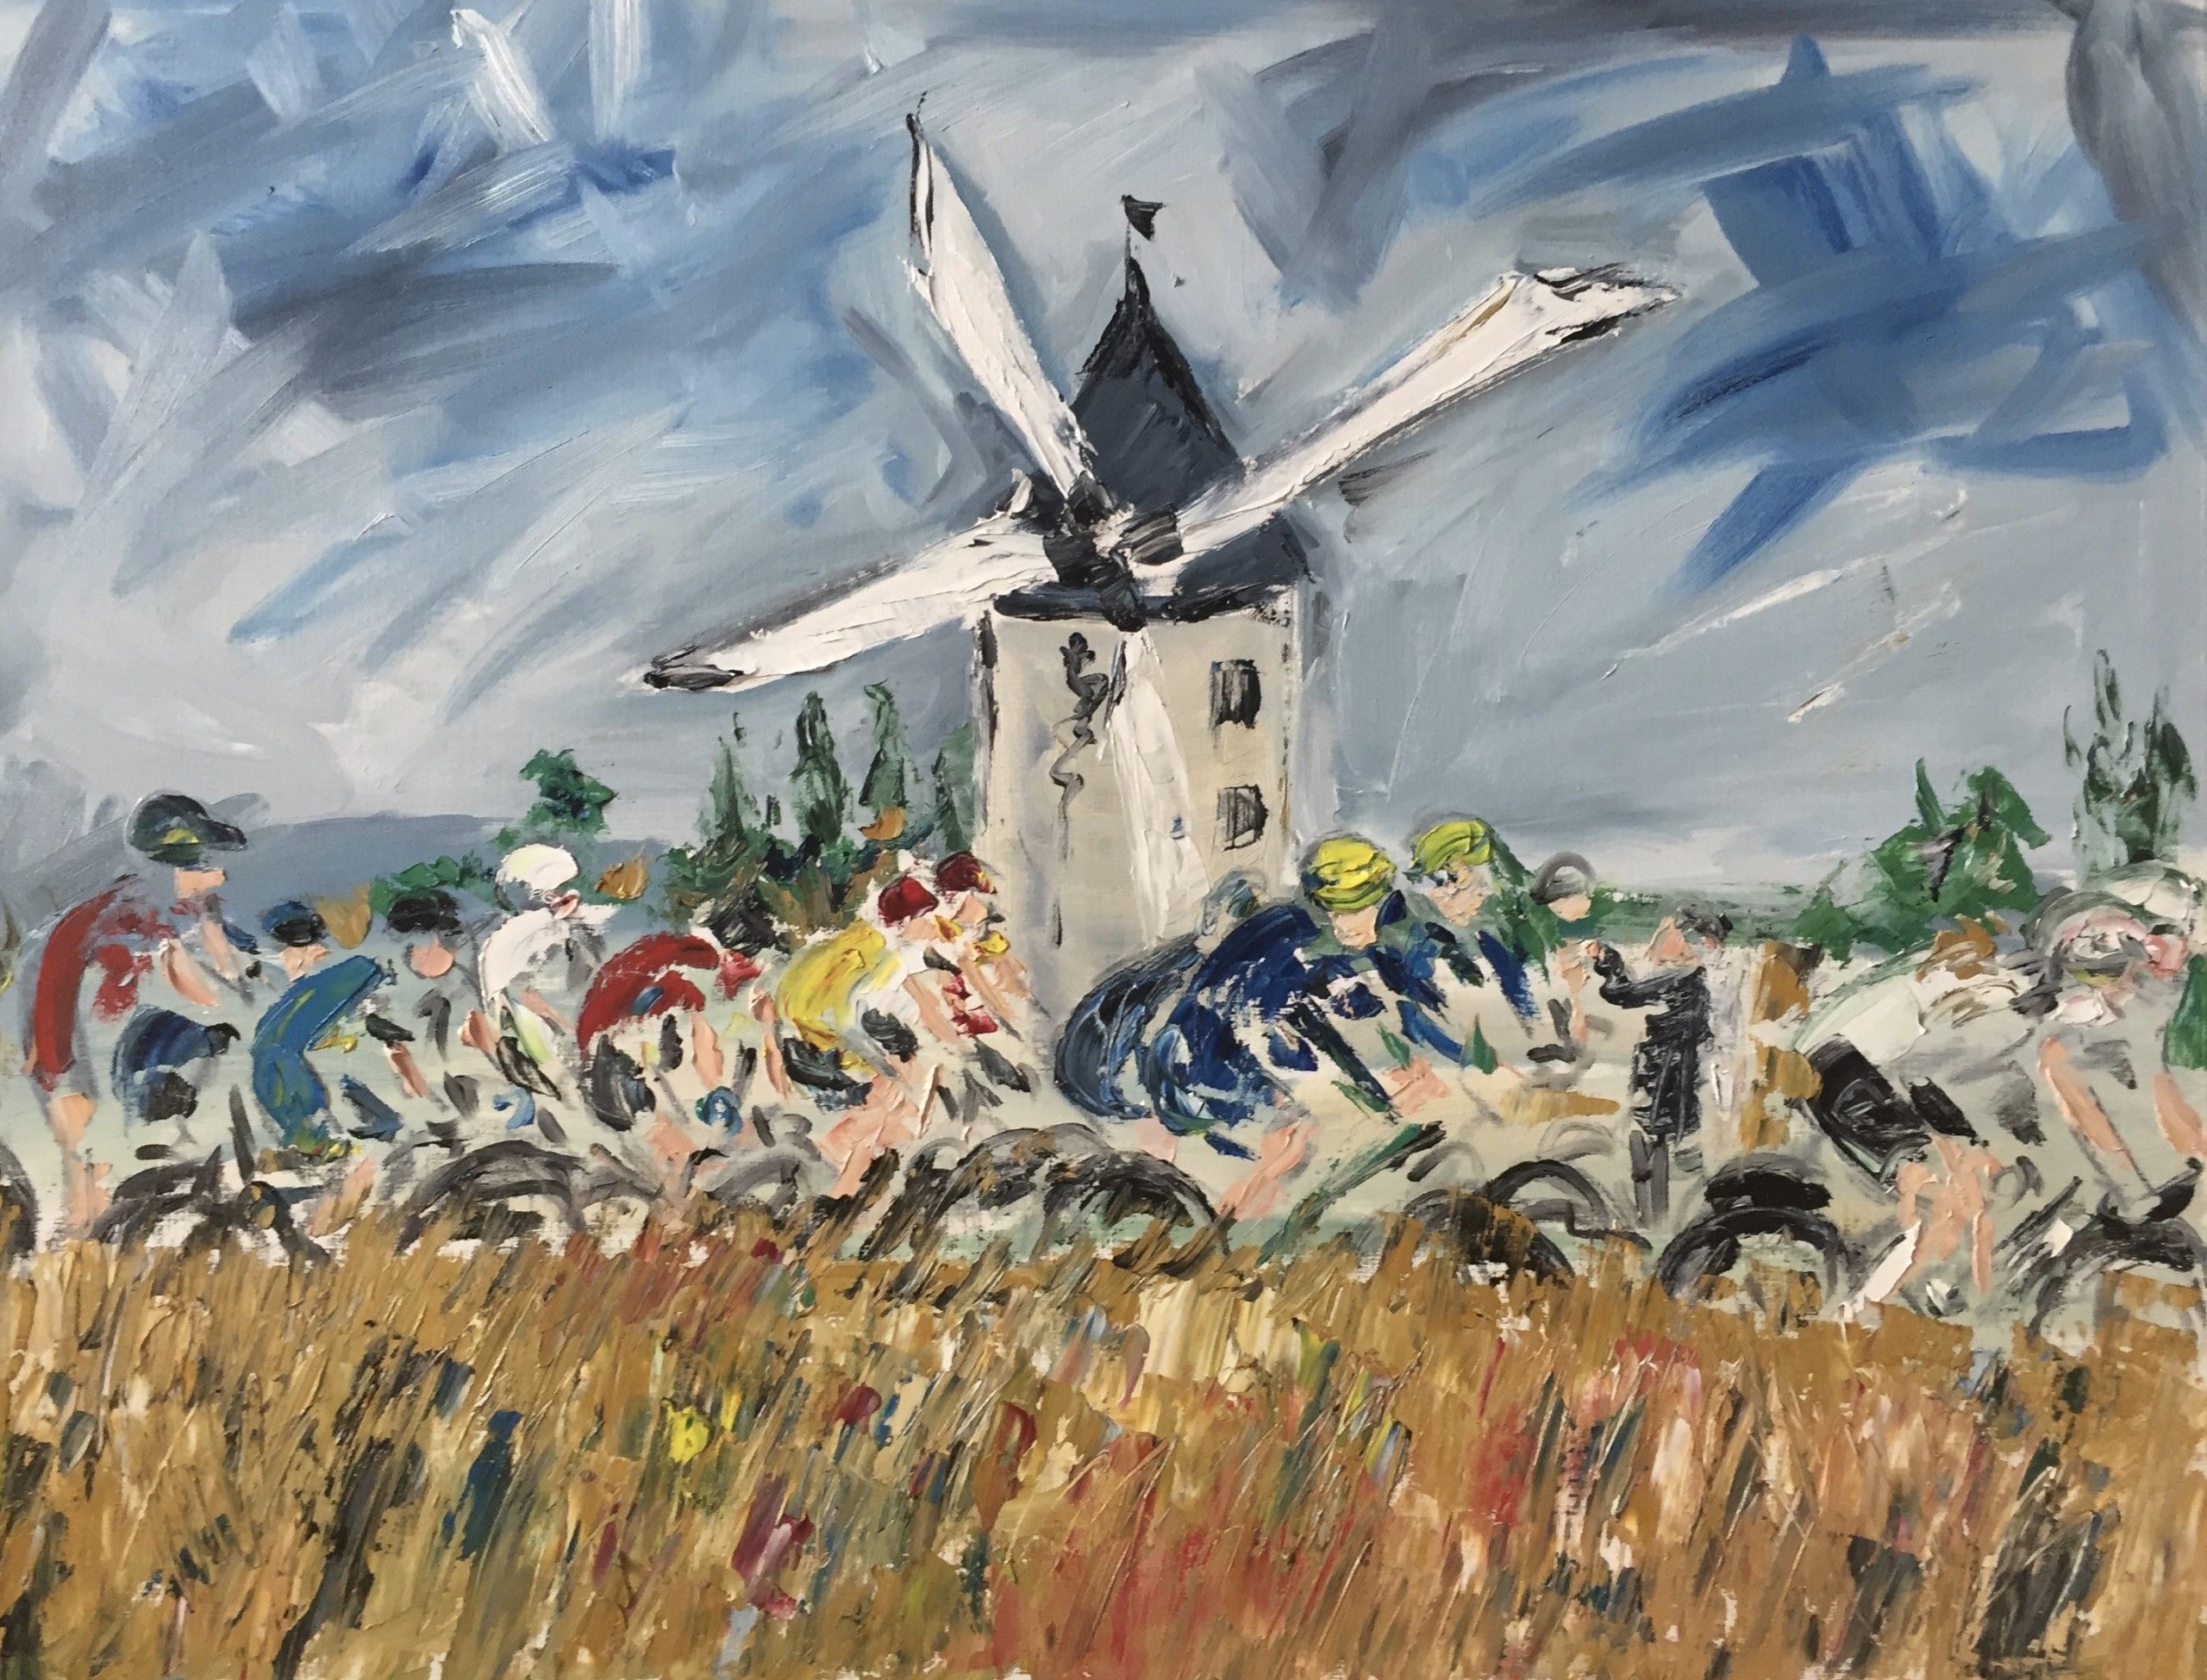 Tour de France, Windmills by Garth Bayley